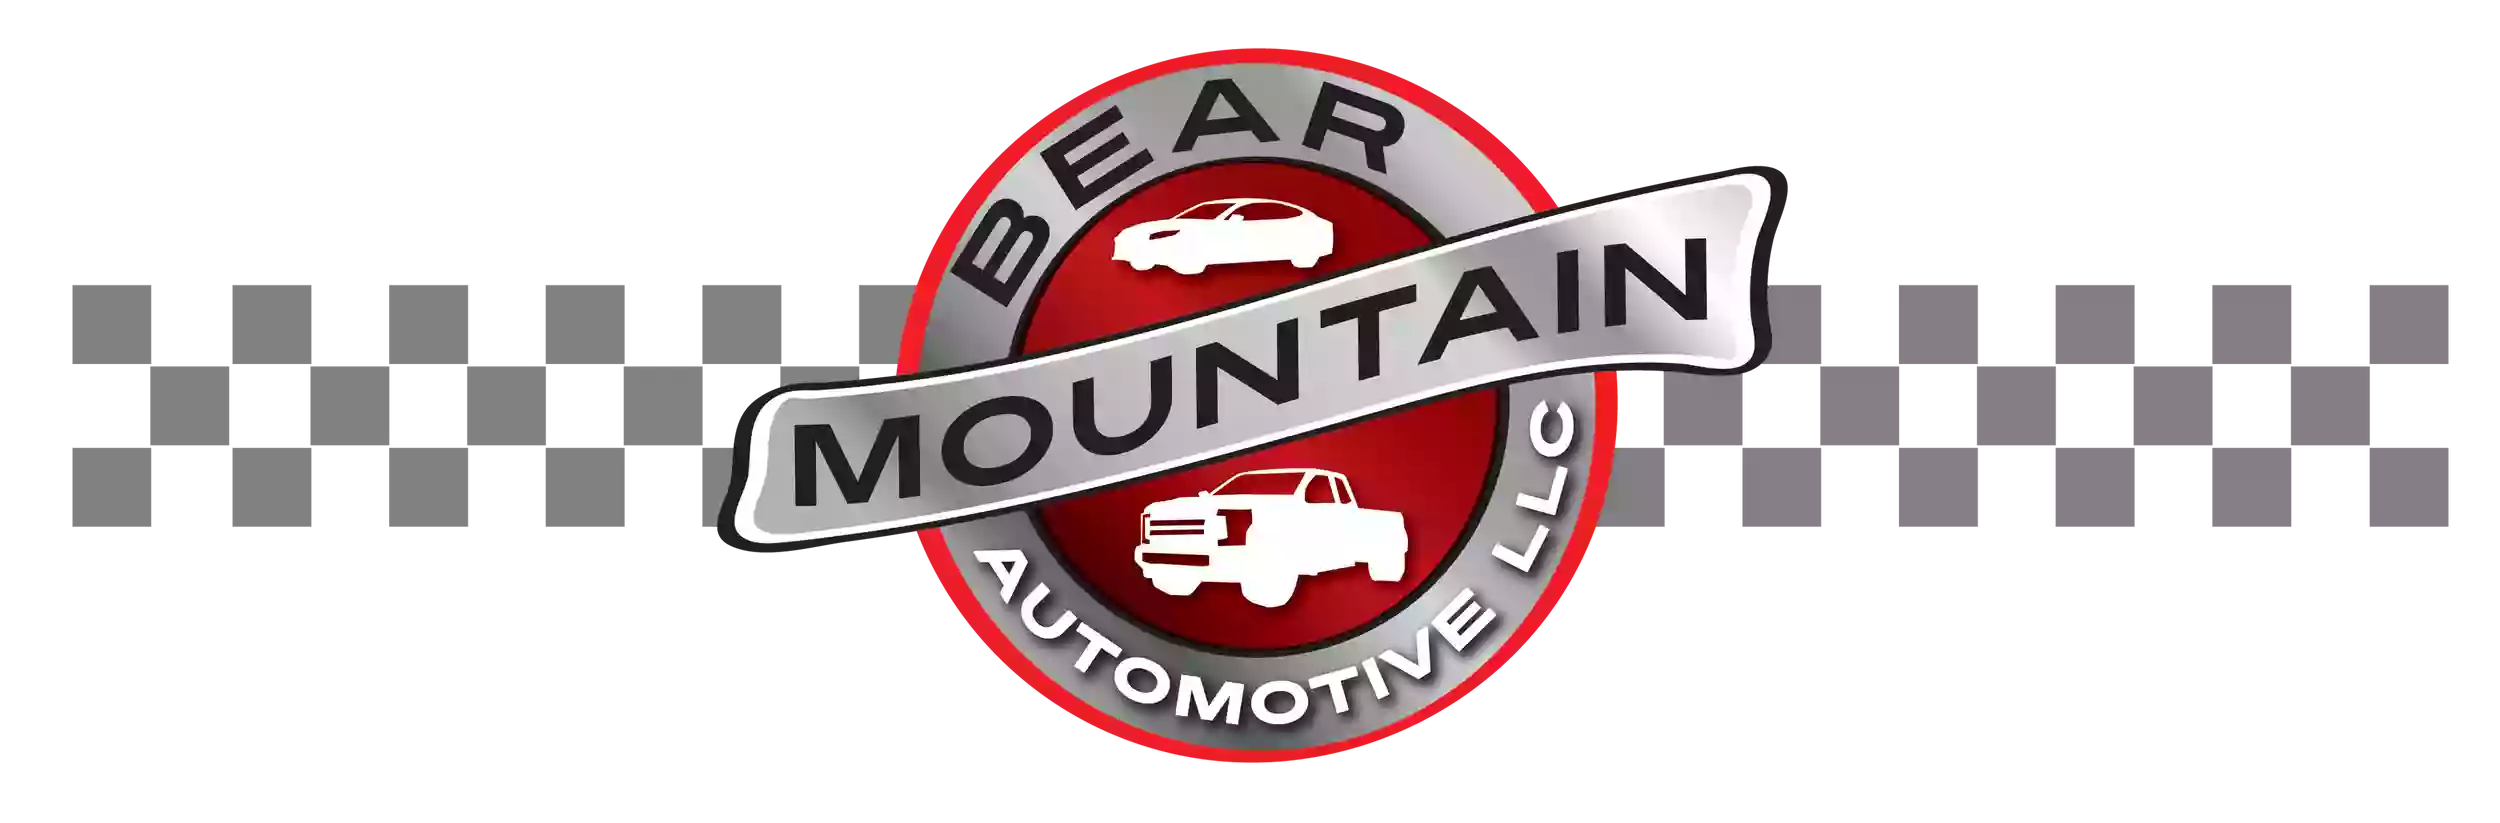 Bear Mountain Automotive LLC